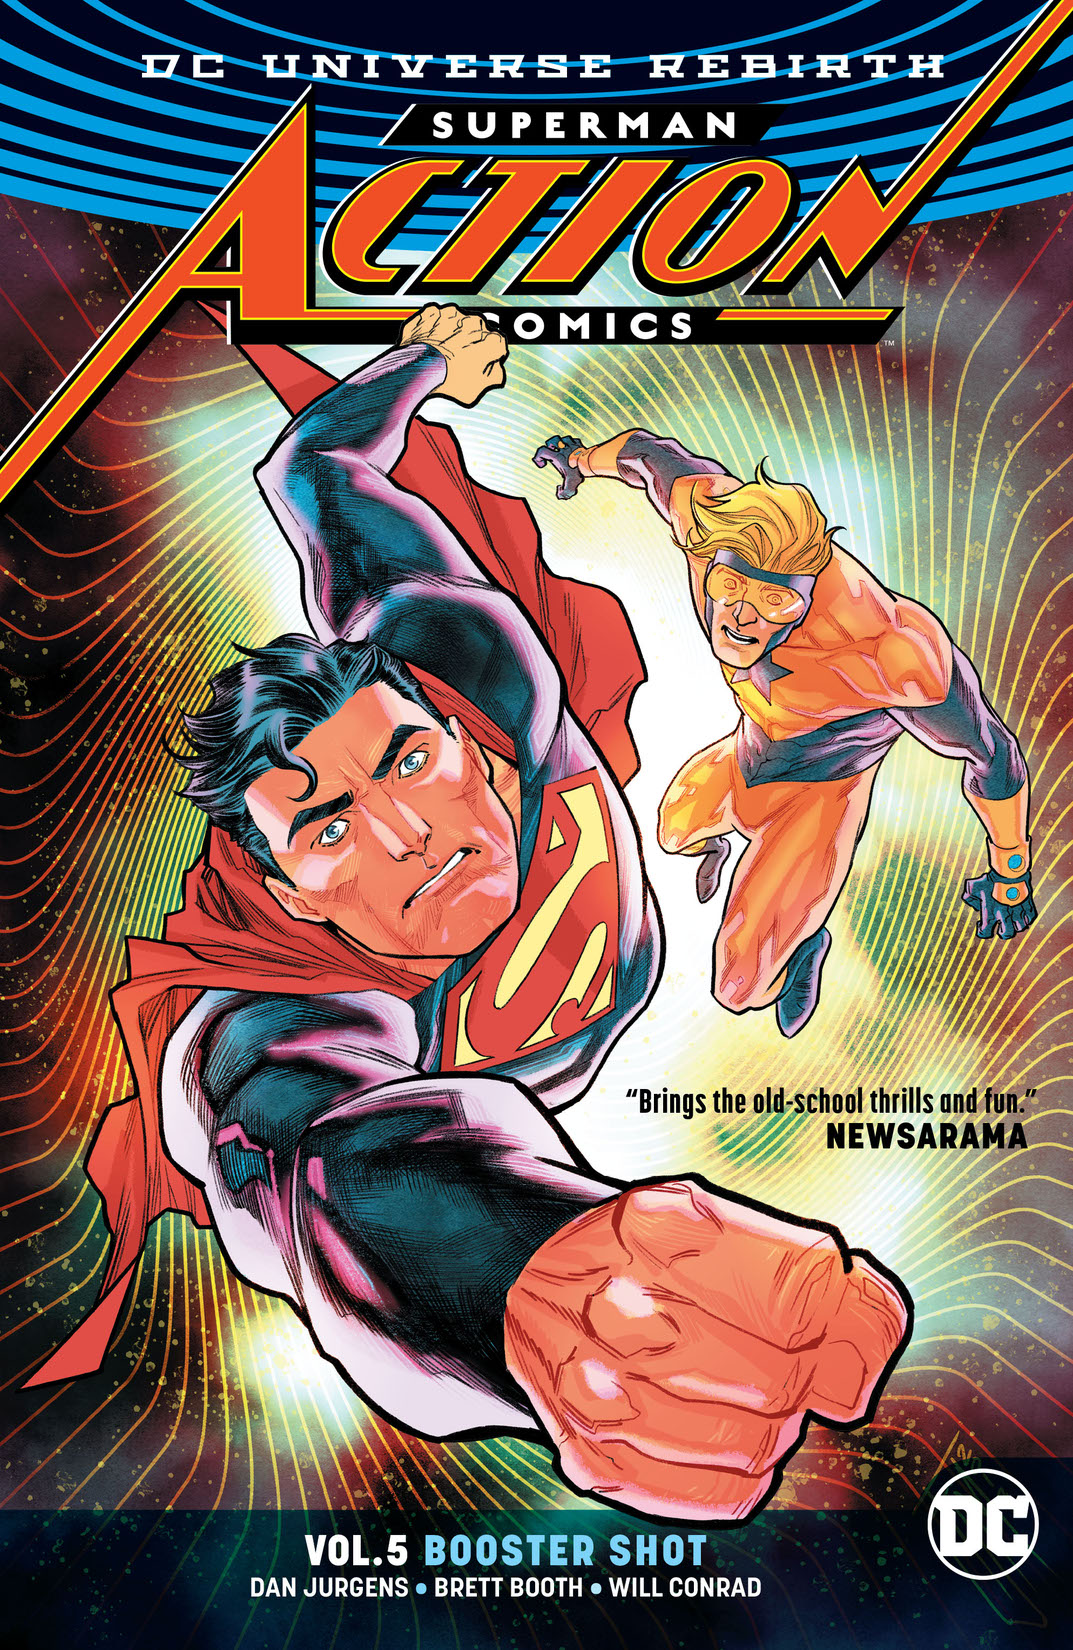 Superman - Action Comics Vol. 5: Booster Shot (Rebirth) preview images